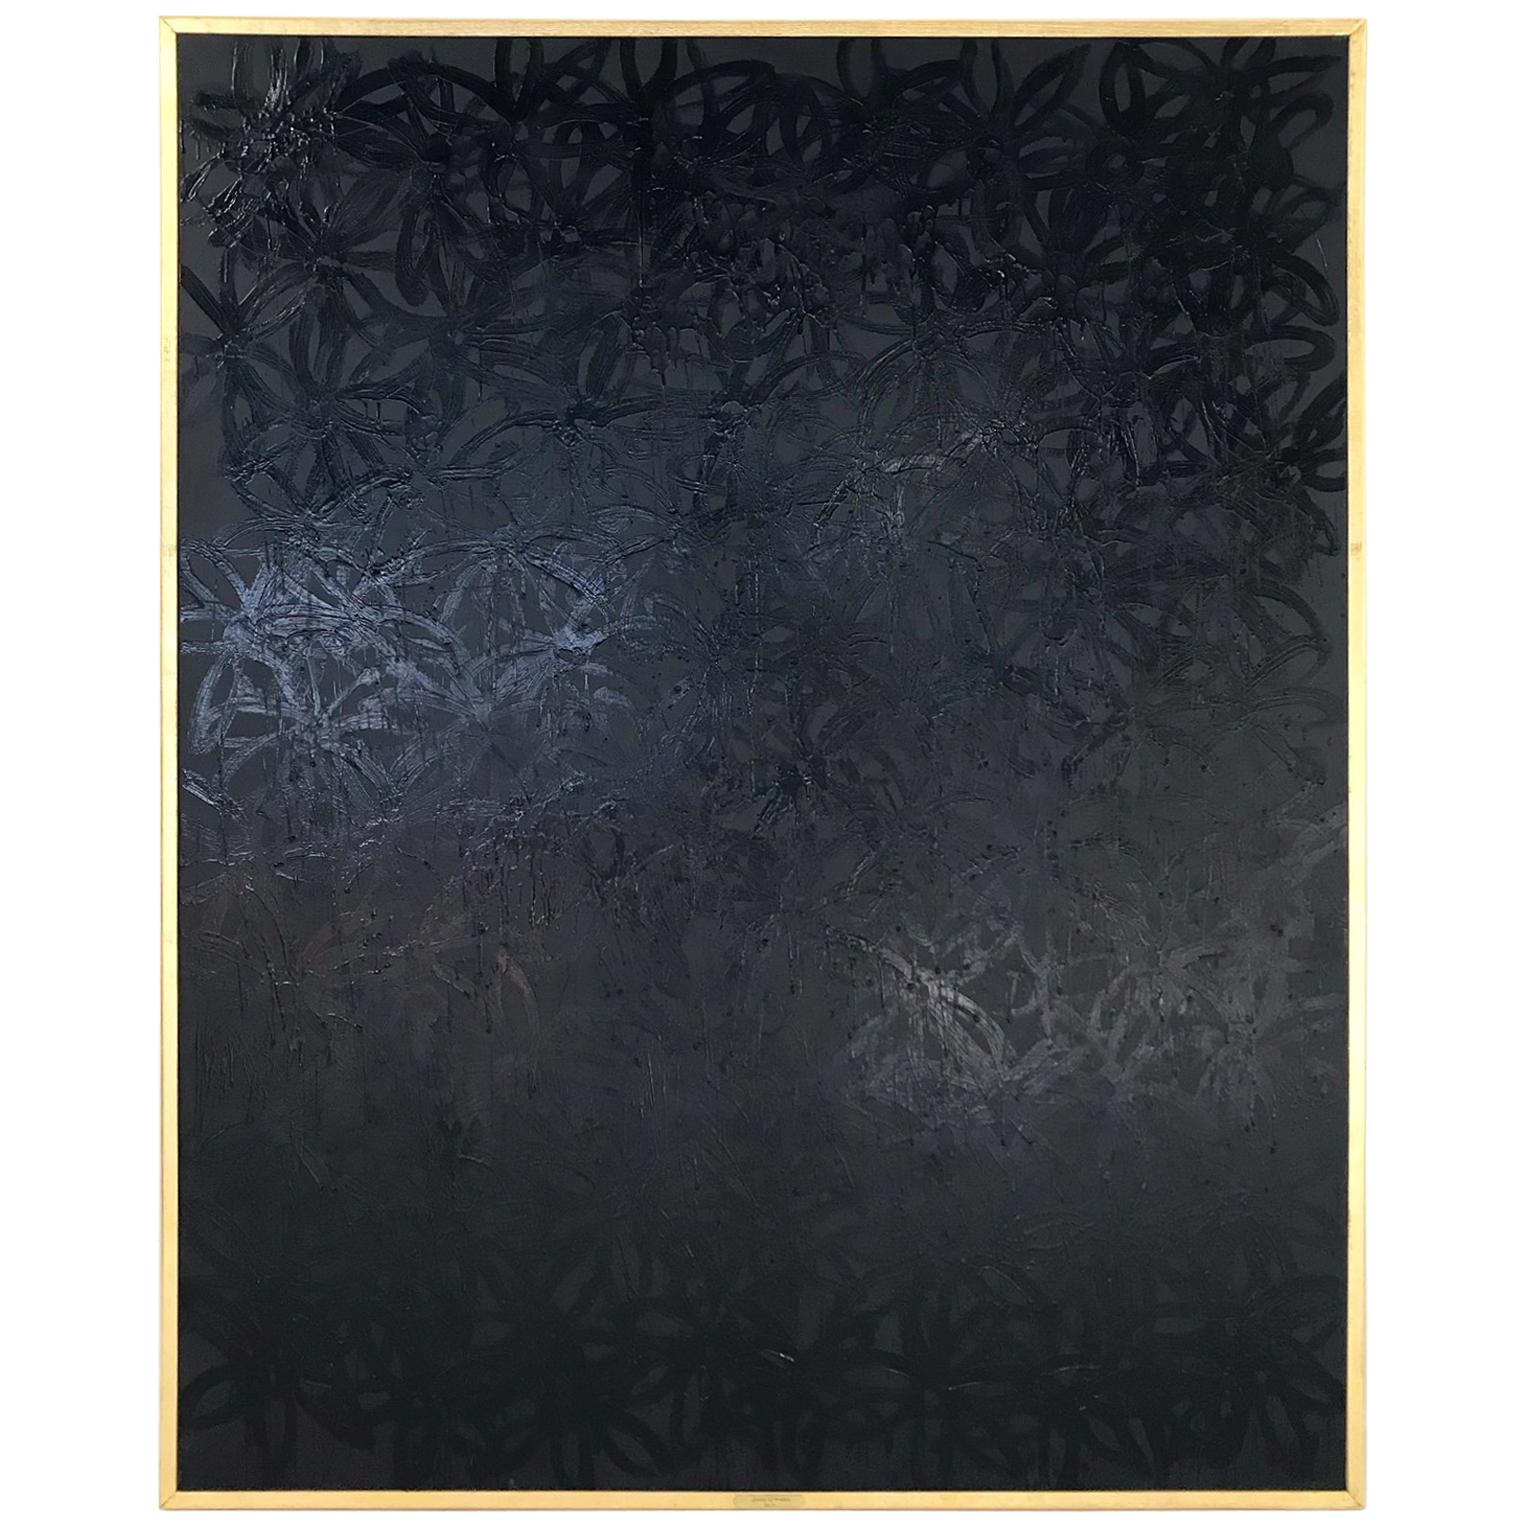 John O'Hara, Daisies, Black on Black, Encaustic Painting